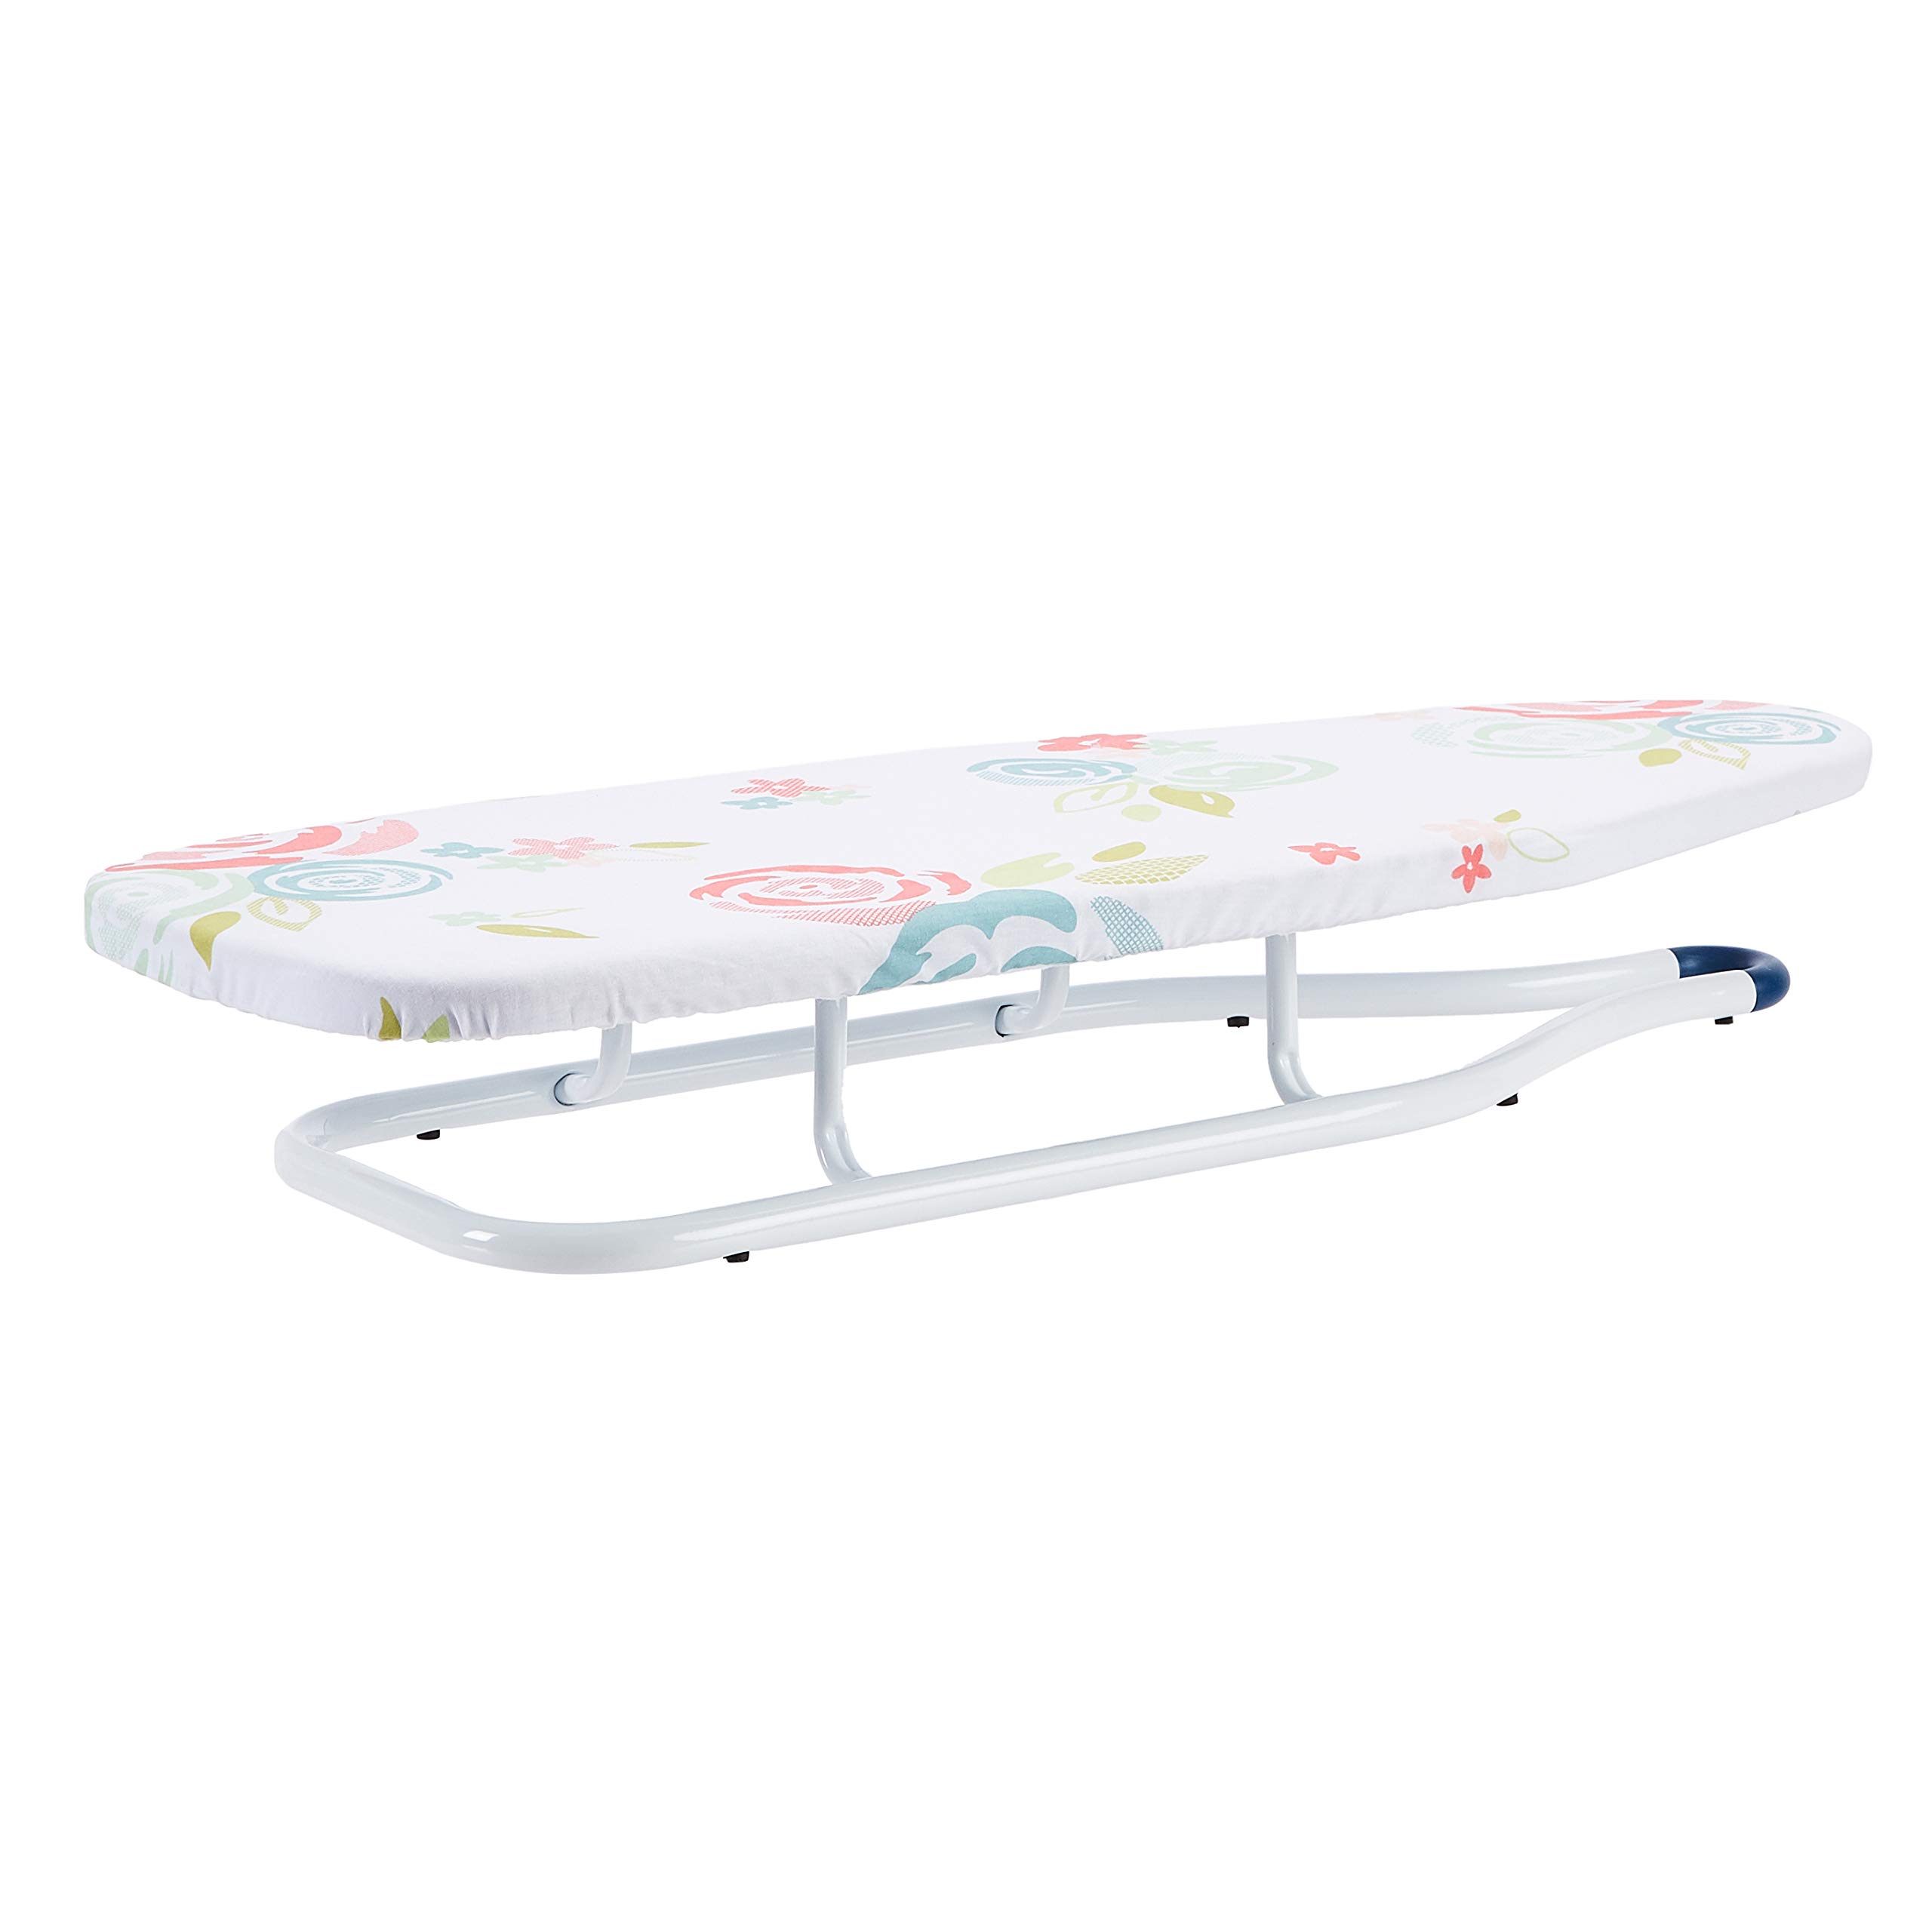 Amazon Basics Ironing Board Tabletop 77x29 cm, White, Floral